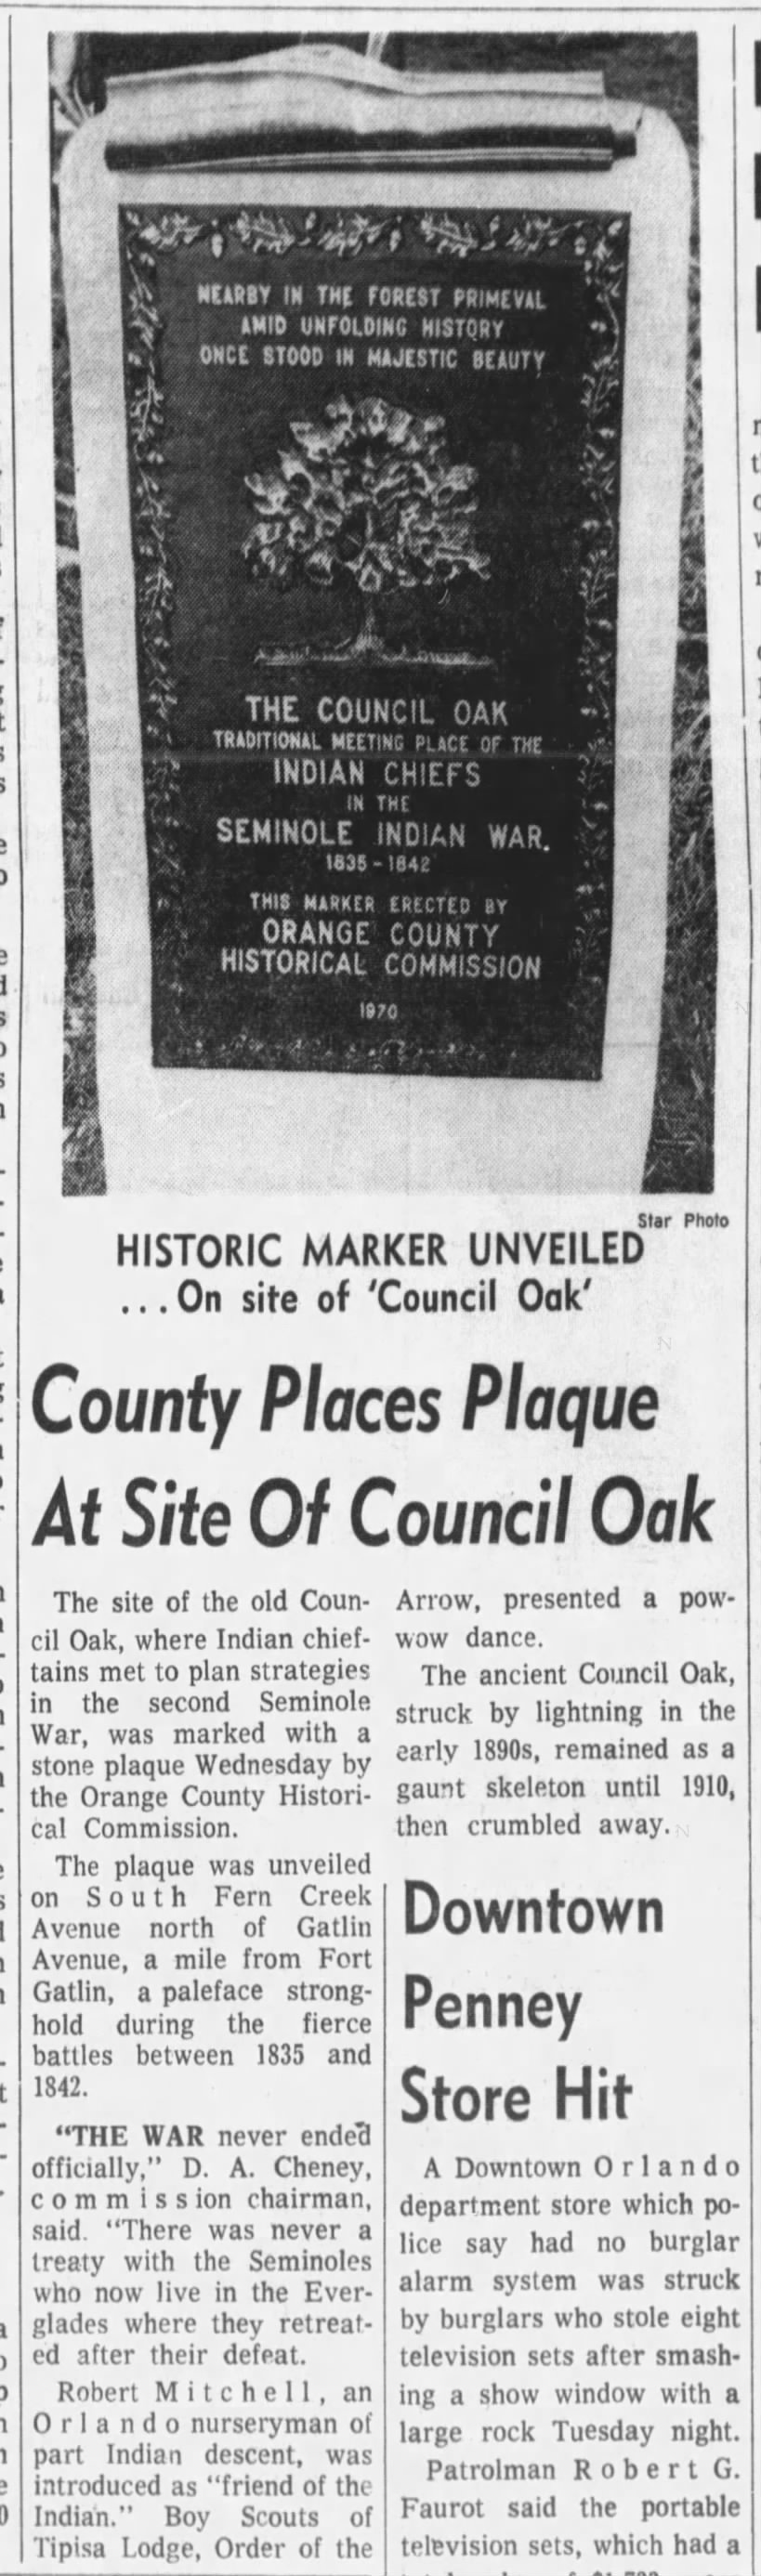 Council Oak marker dedicated